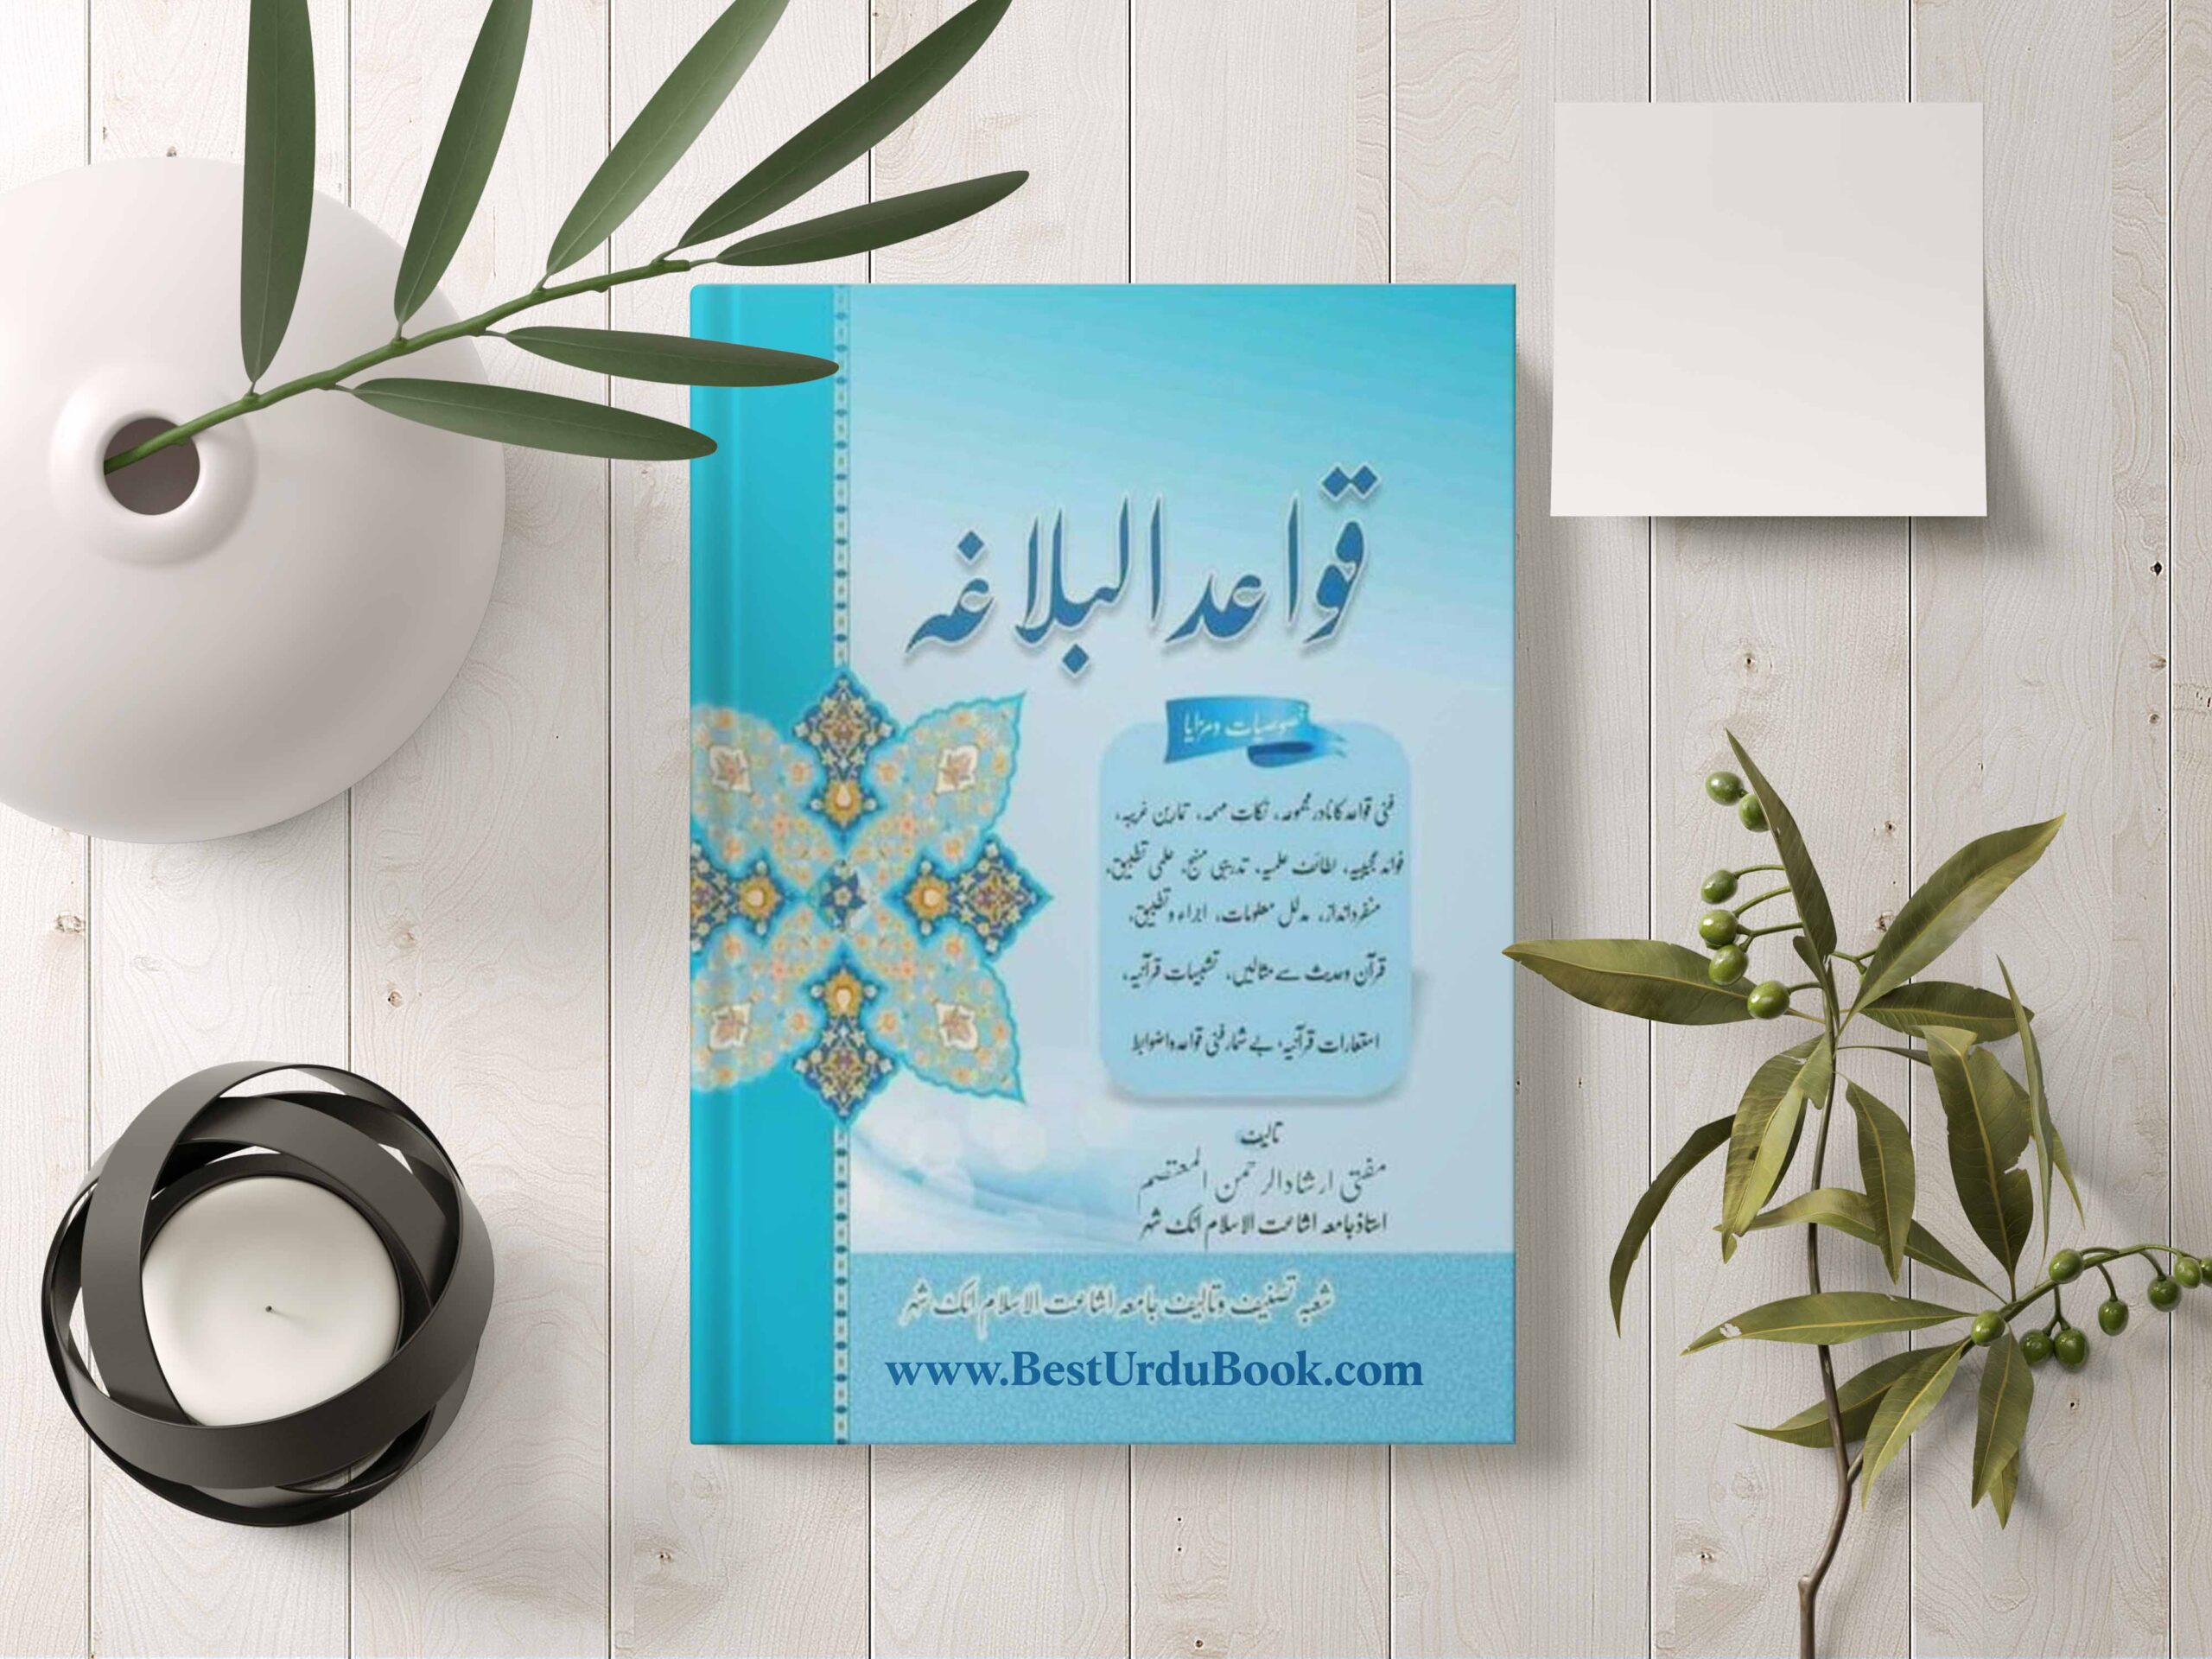 Qawaid ul Balaghah Book Download In Urdu & pdf format